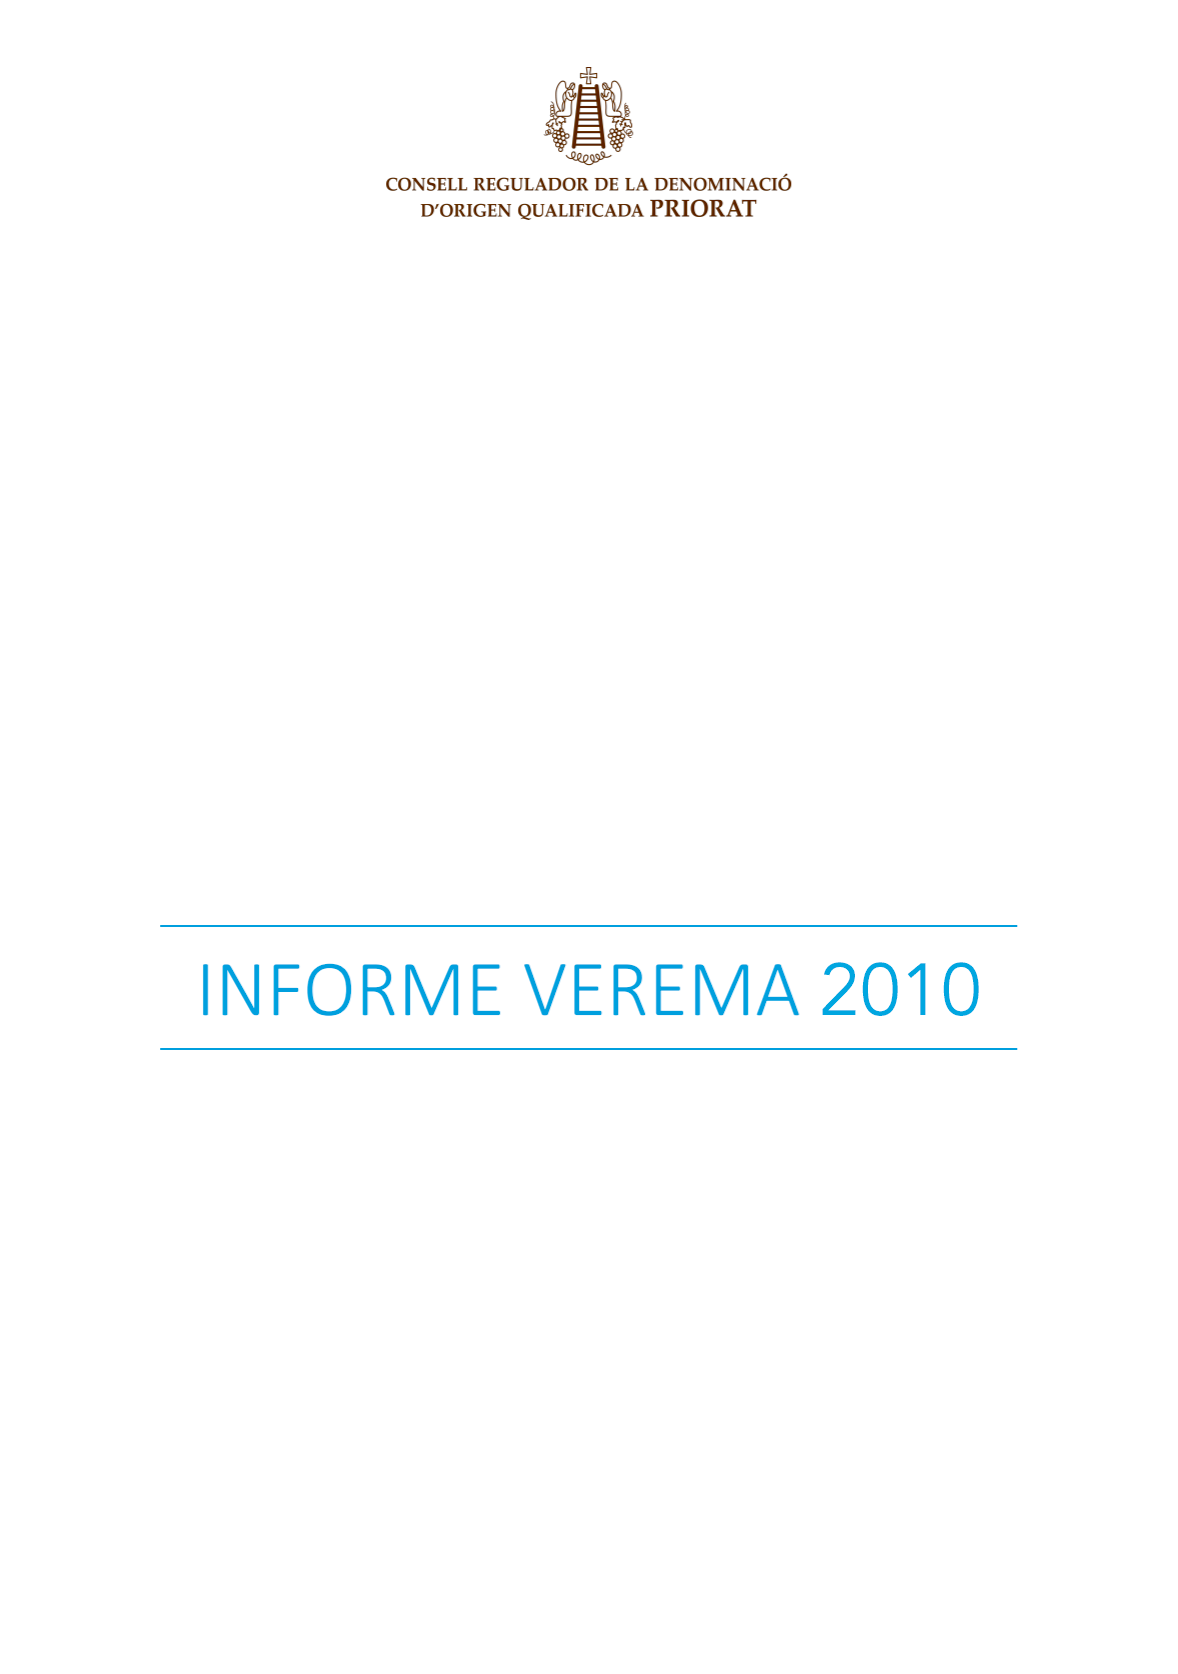 Informe de verema 2010